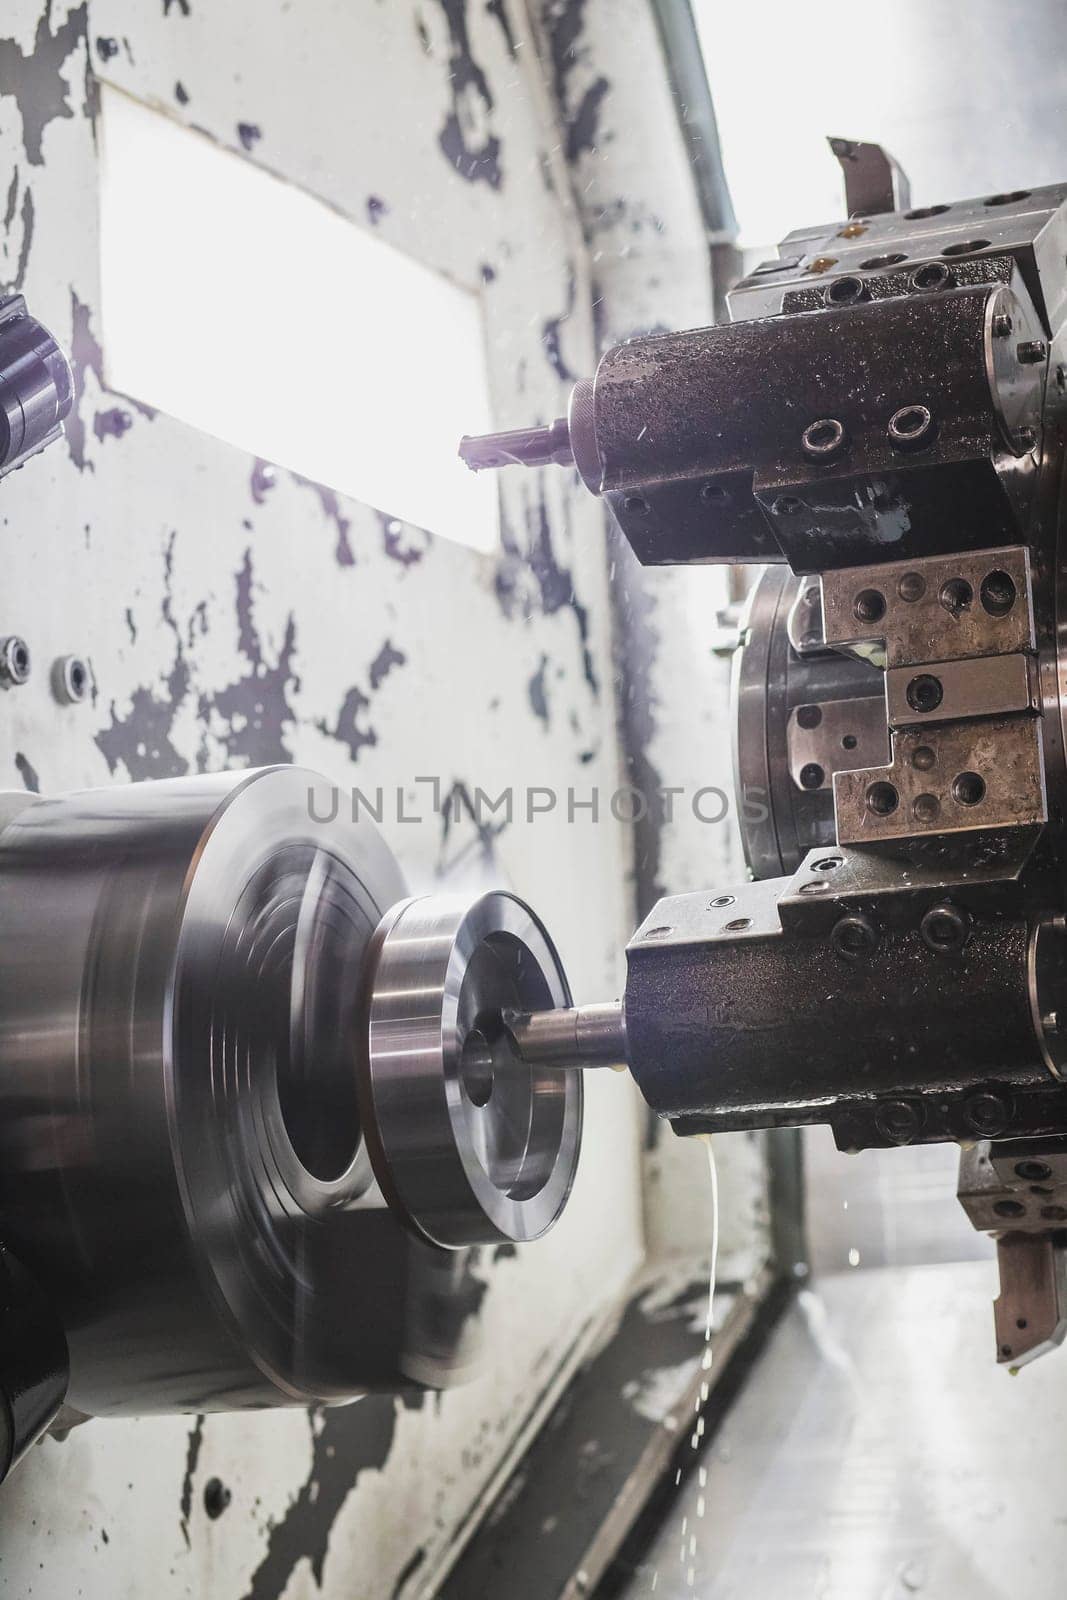 A milling cutter in a CNC machine cuts a metal workpiece that rotates by Viktor_Osypenko